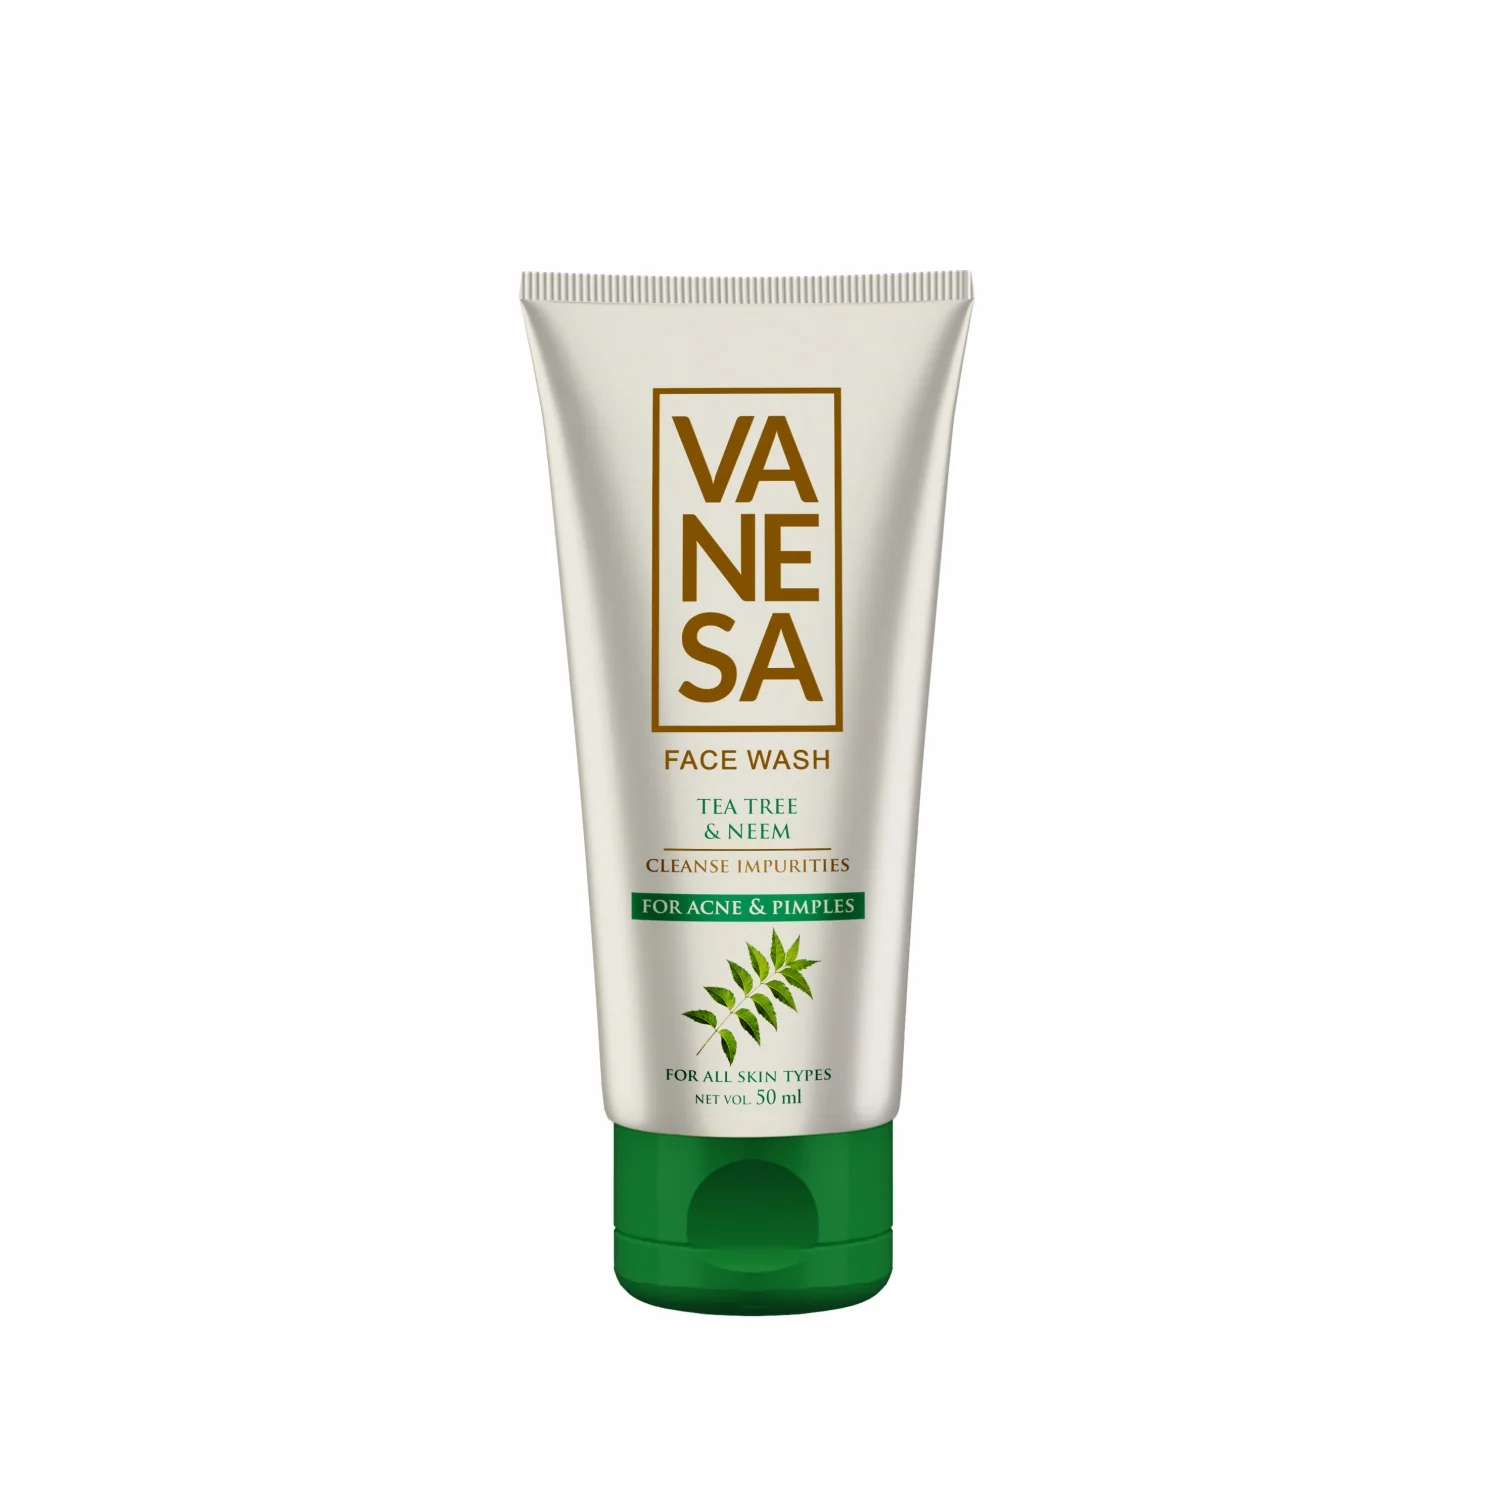 Vanesa Face Wash, Tea Tree & Neem | Cleanse Impurities | For Acne & Pimple